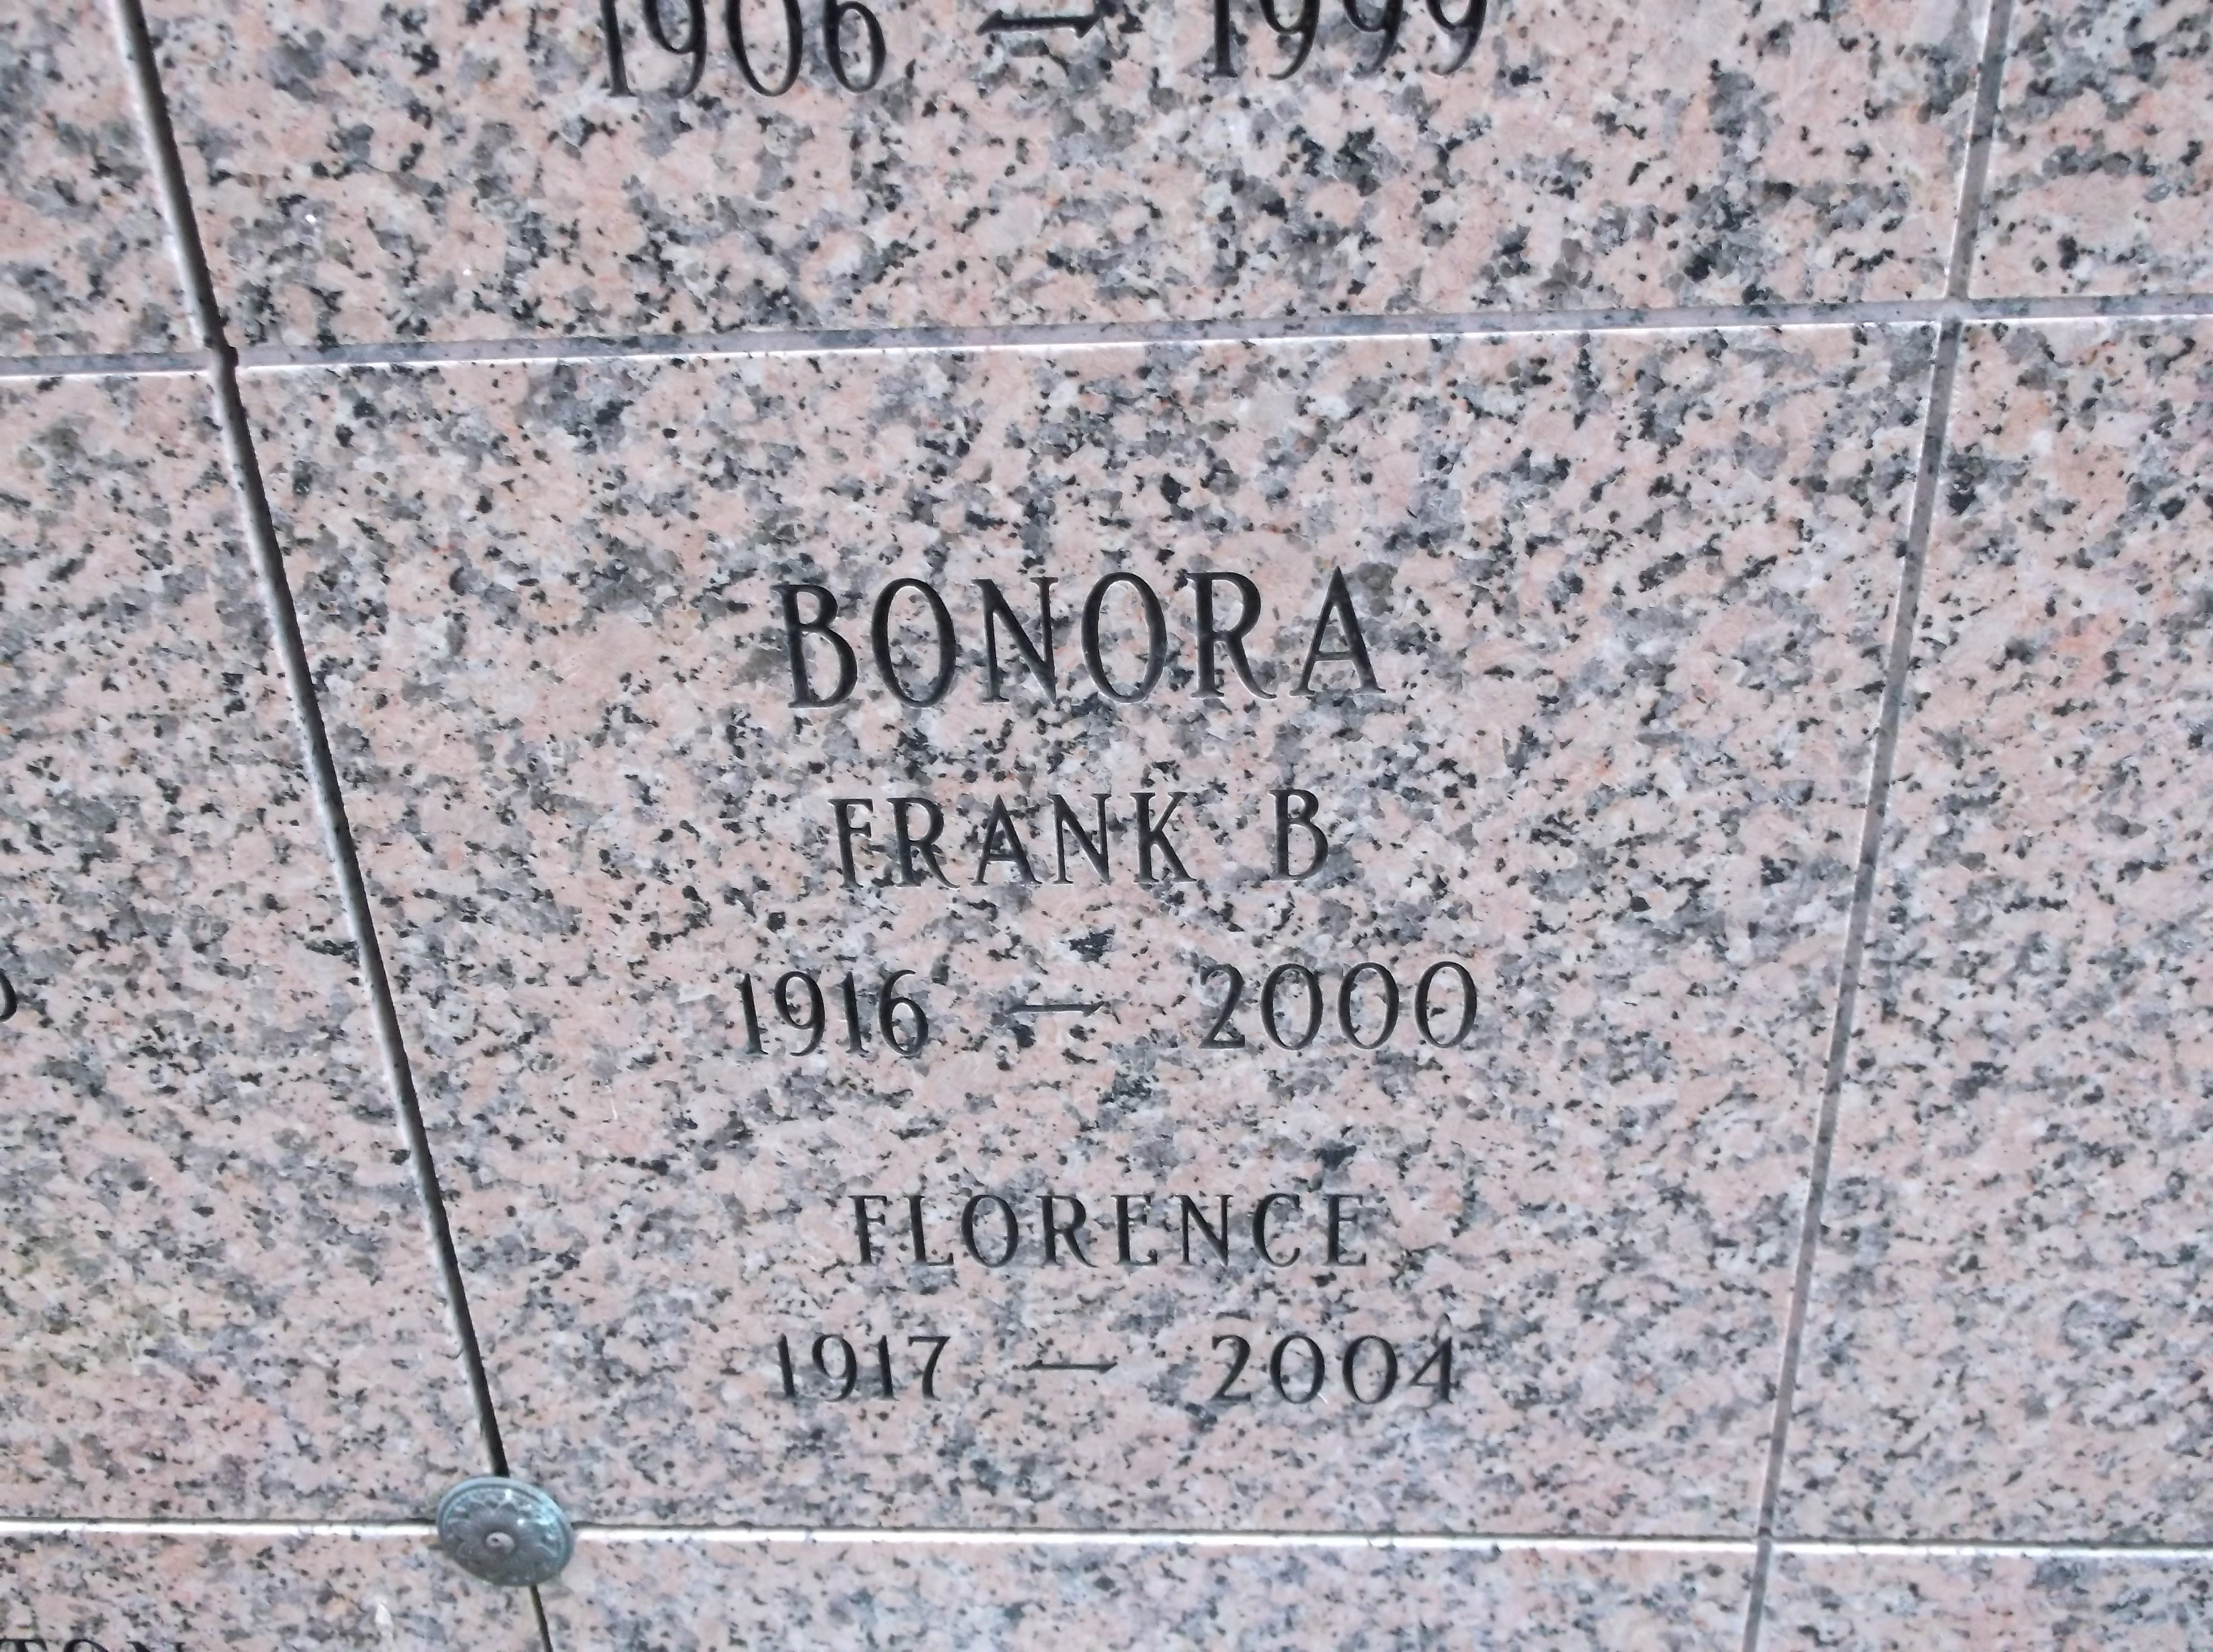 Frank B Bonora